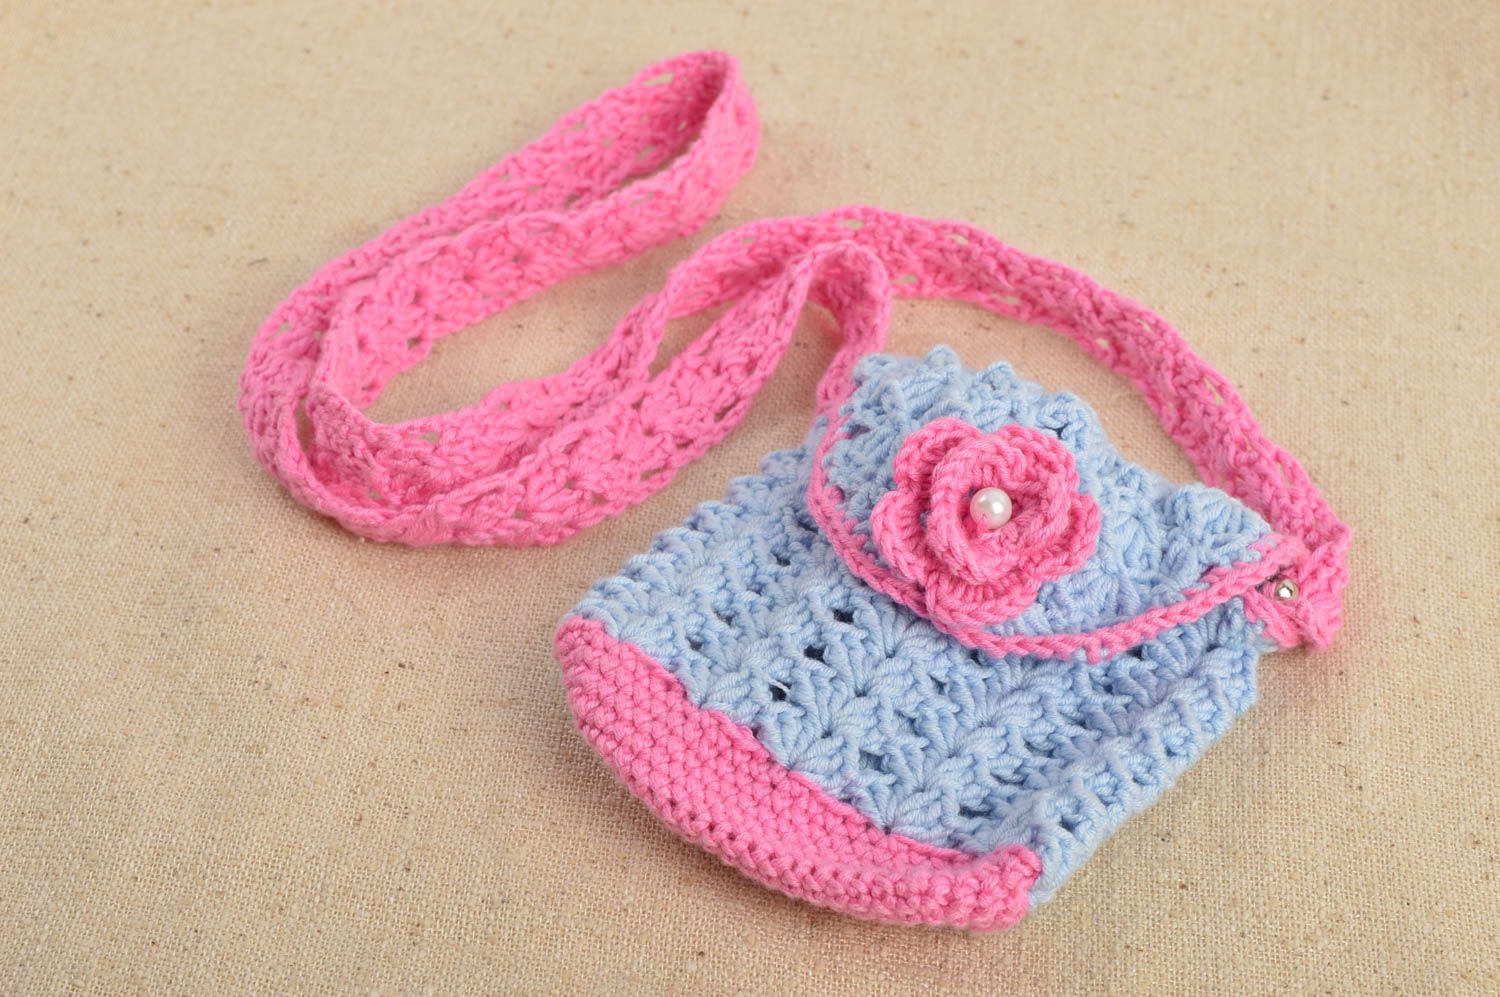 Stylish handmade crochet bag shoulder bag childrens luxury bags gifts for kids photo 1